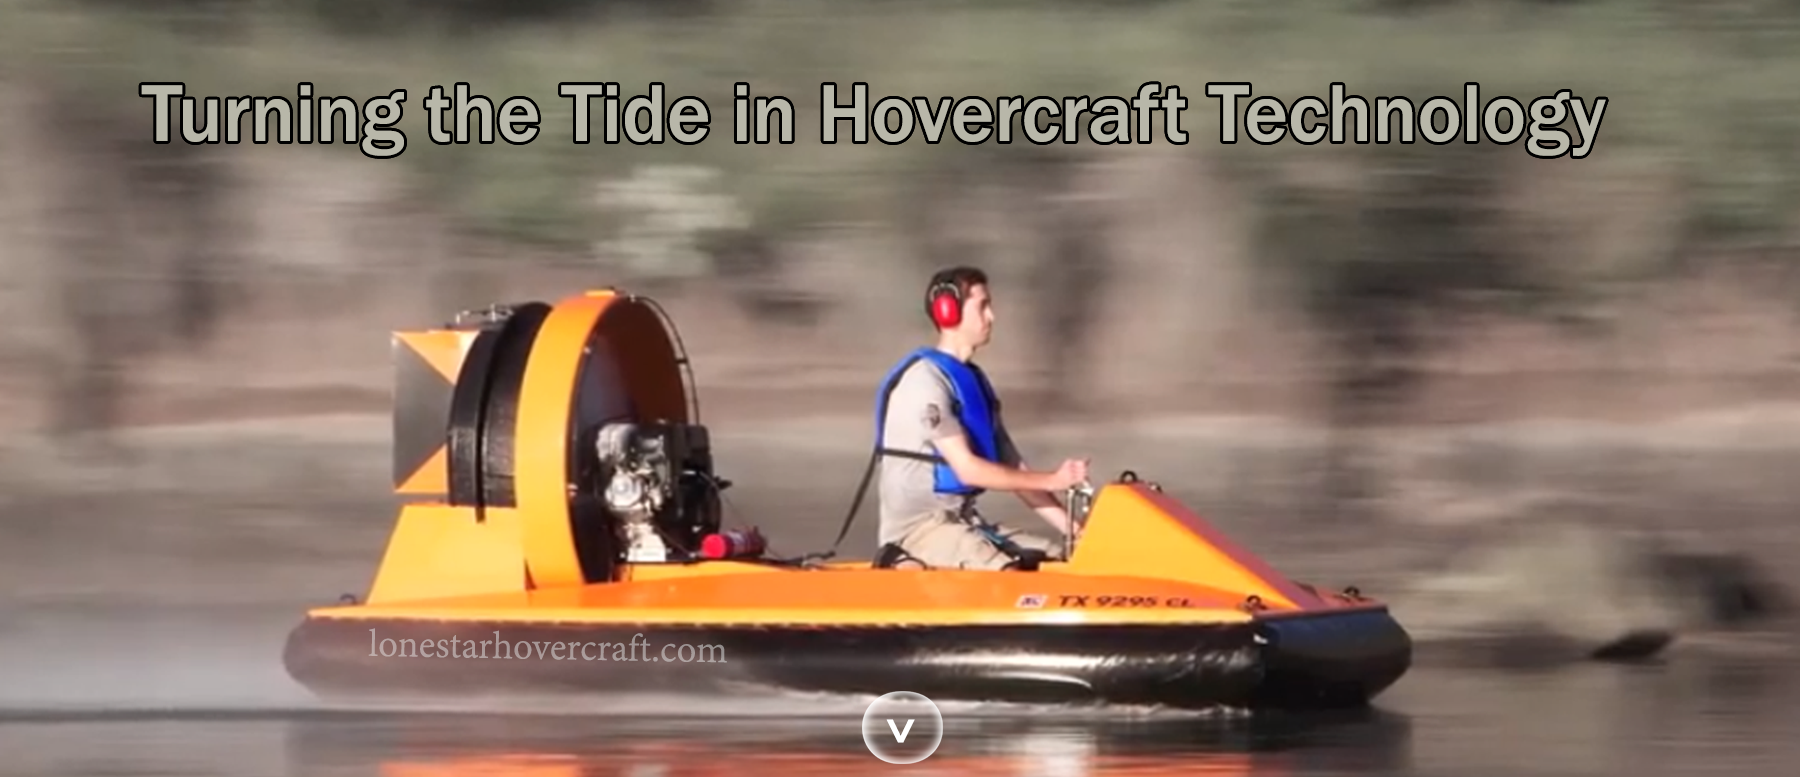 Man driving hovercraft